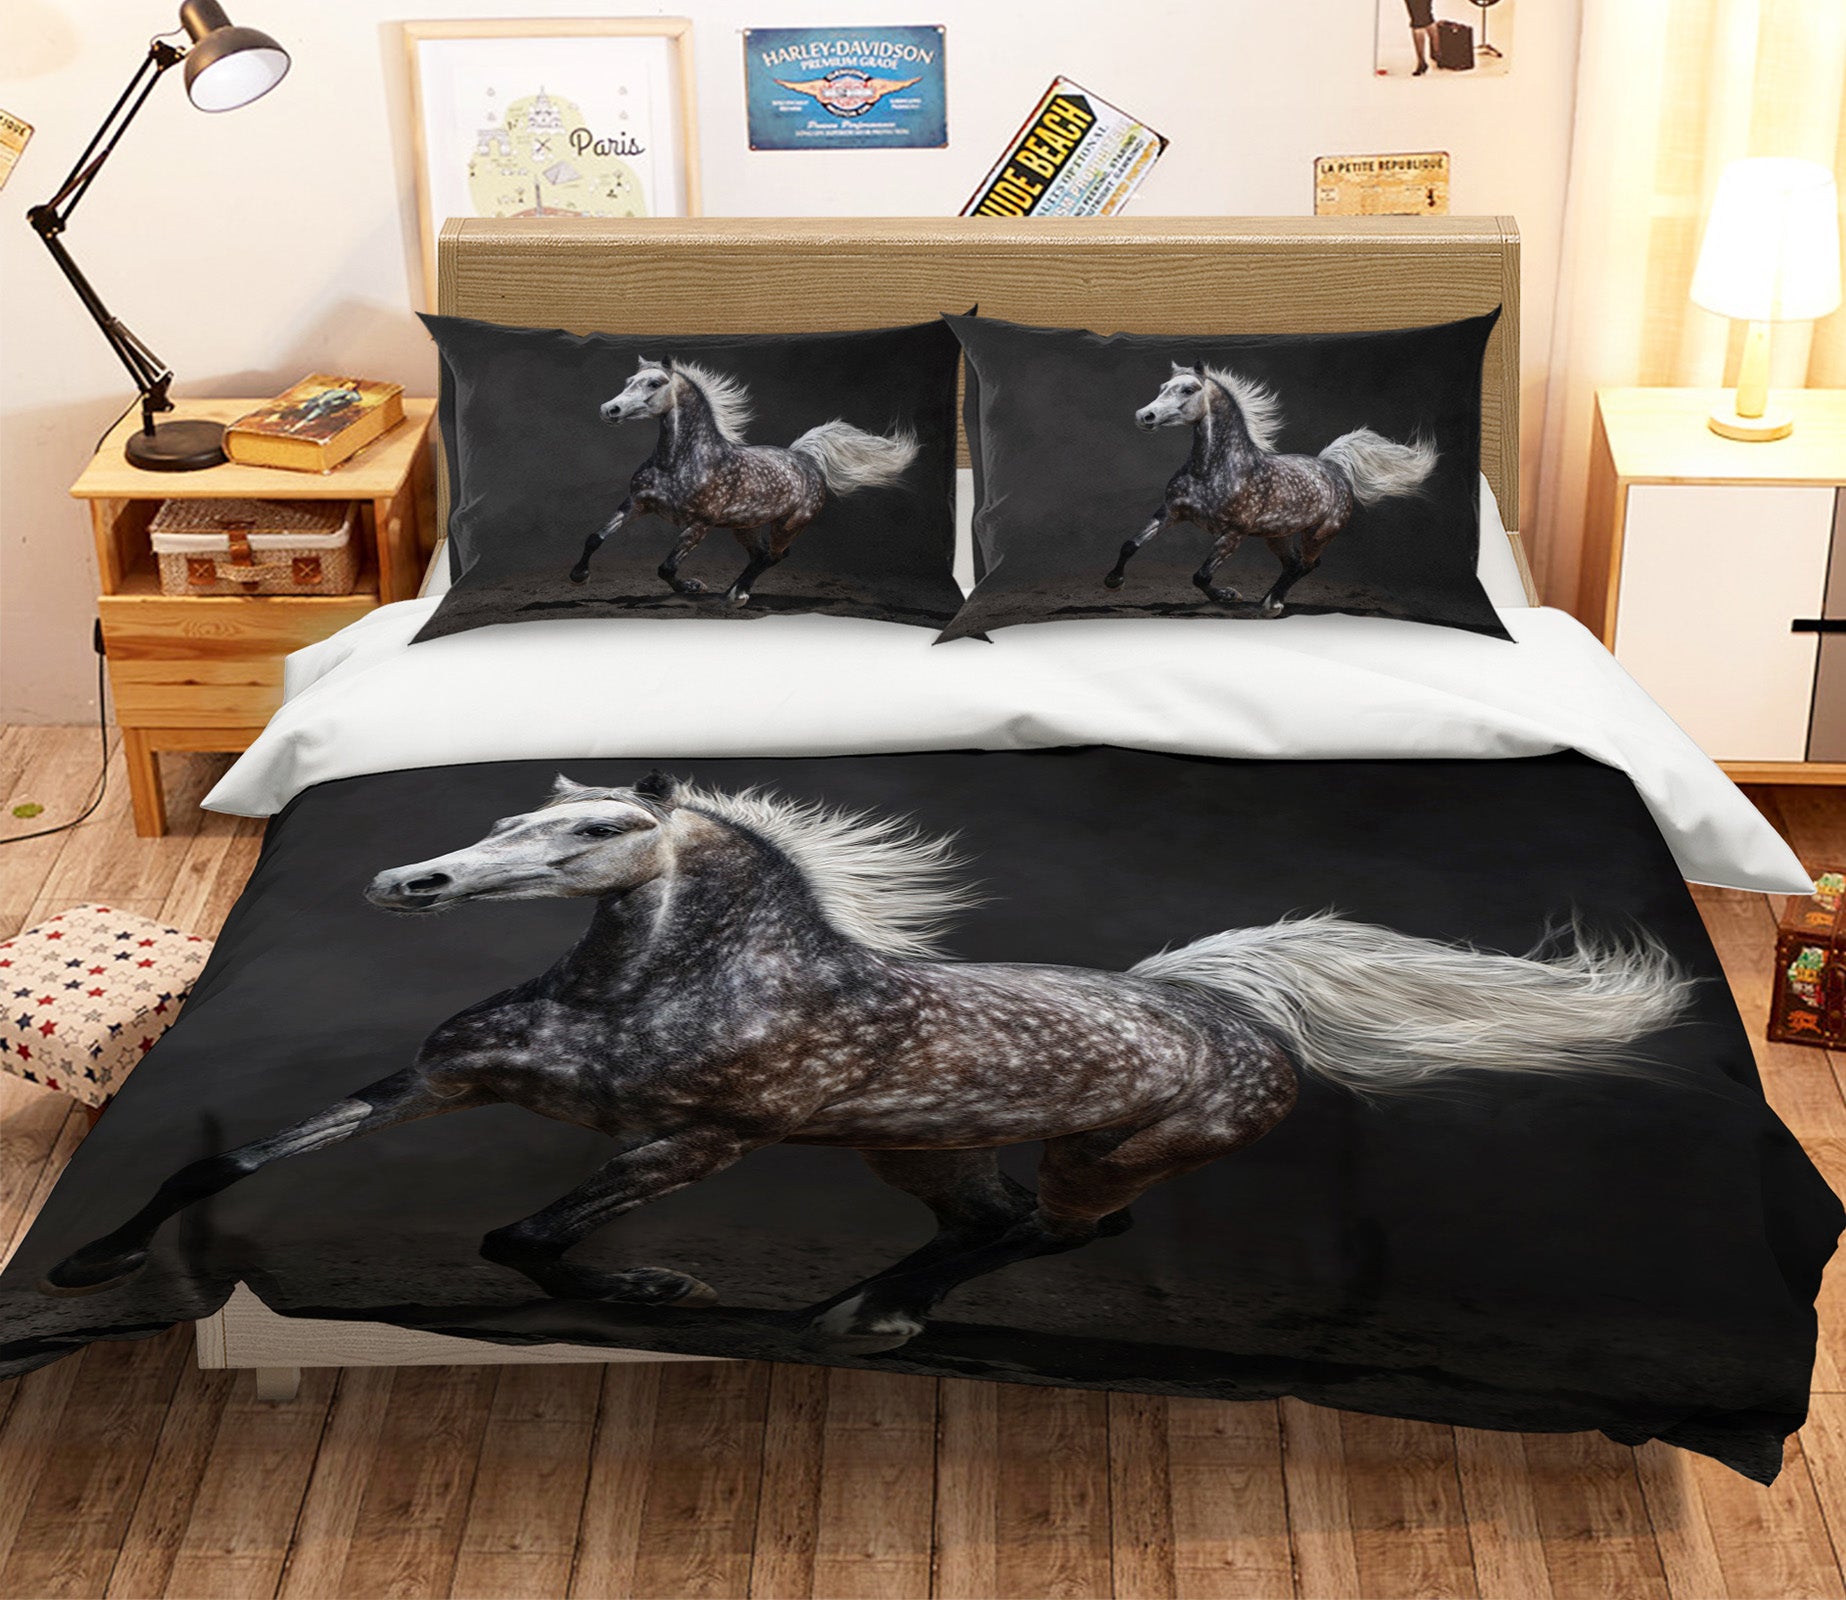 3D Running Bblack Horse 061 Bed Pillowcases Quilt